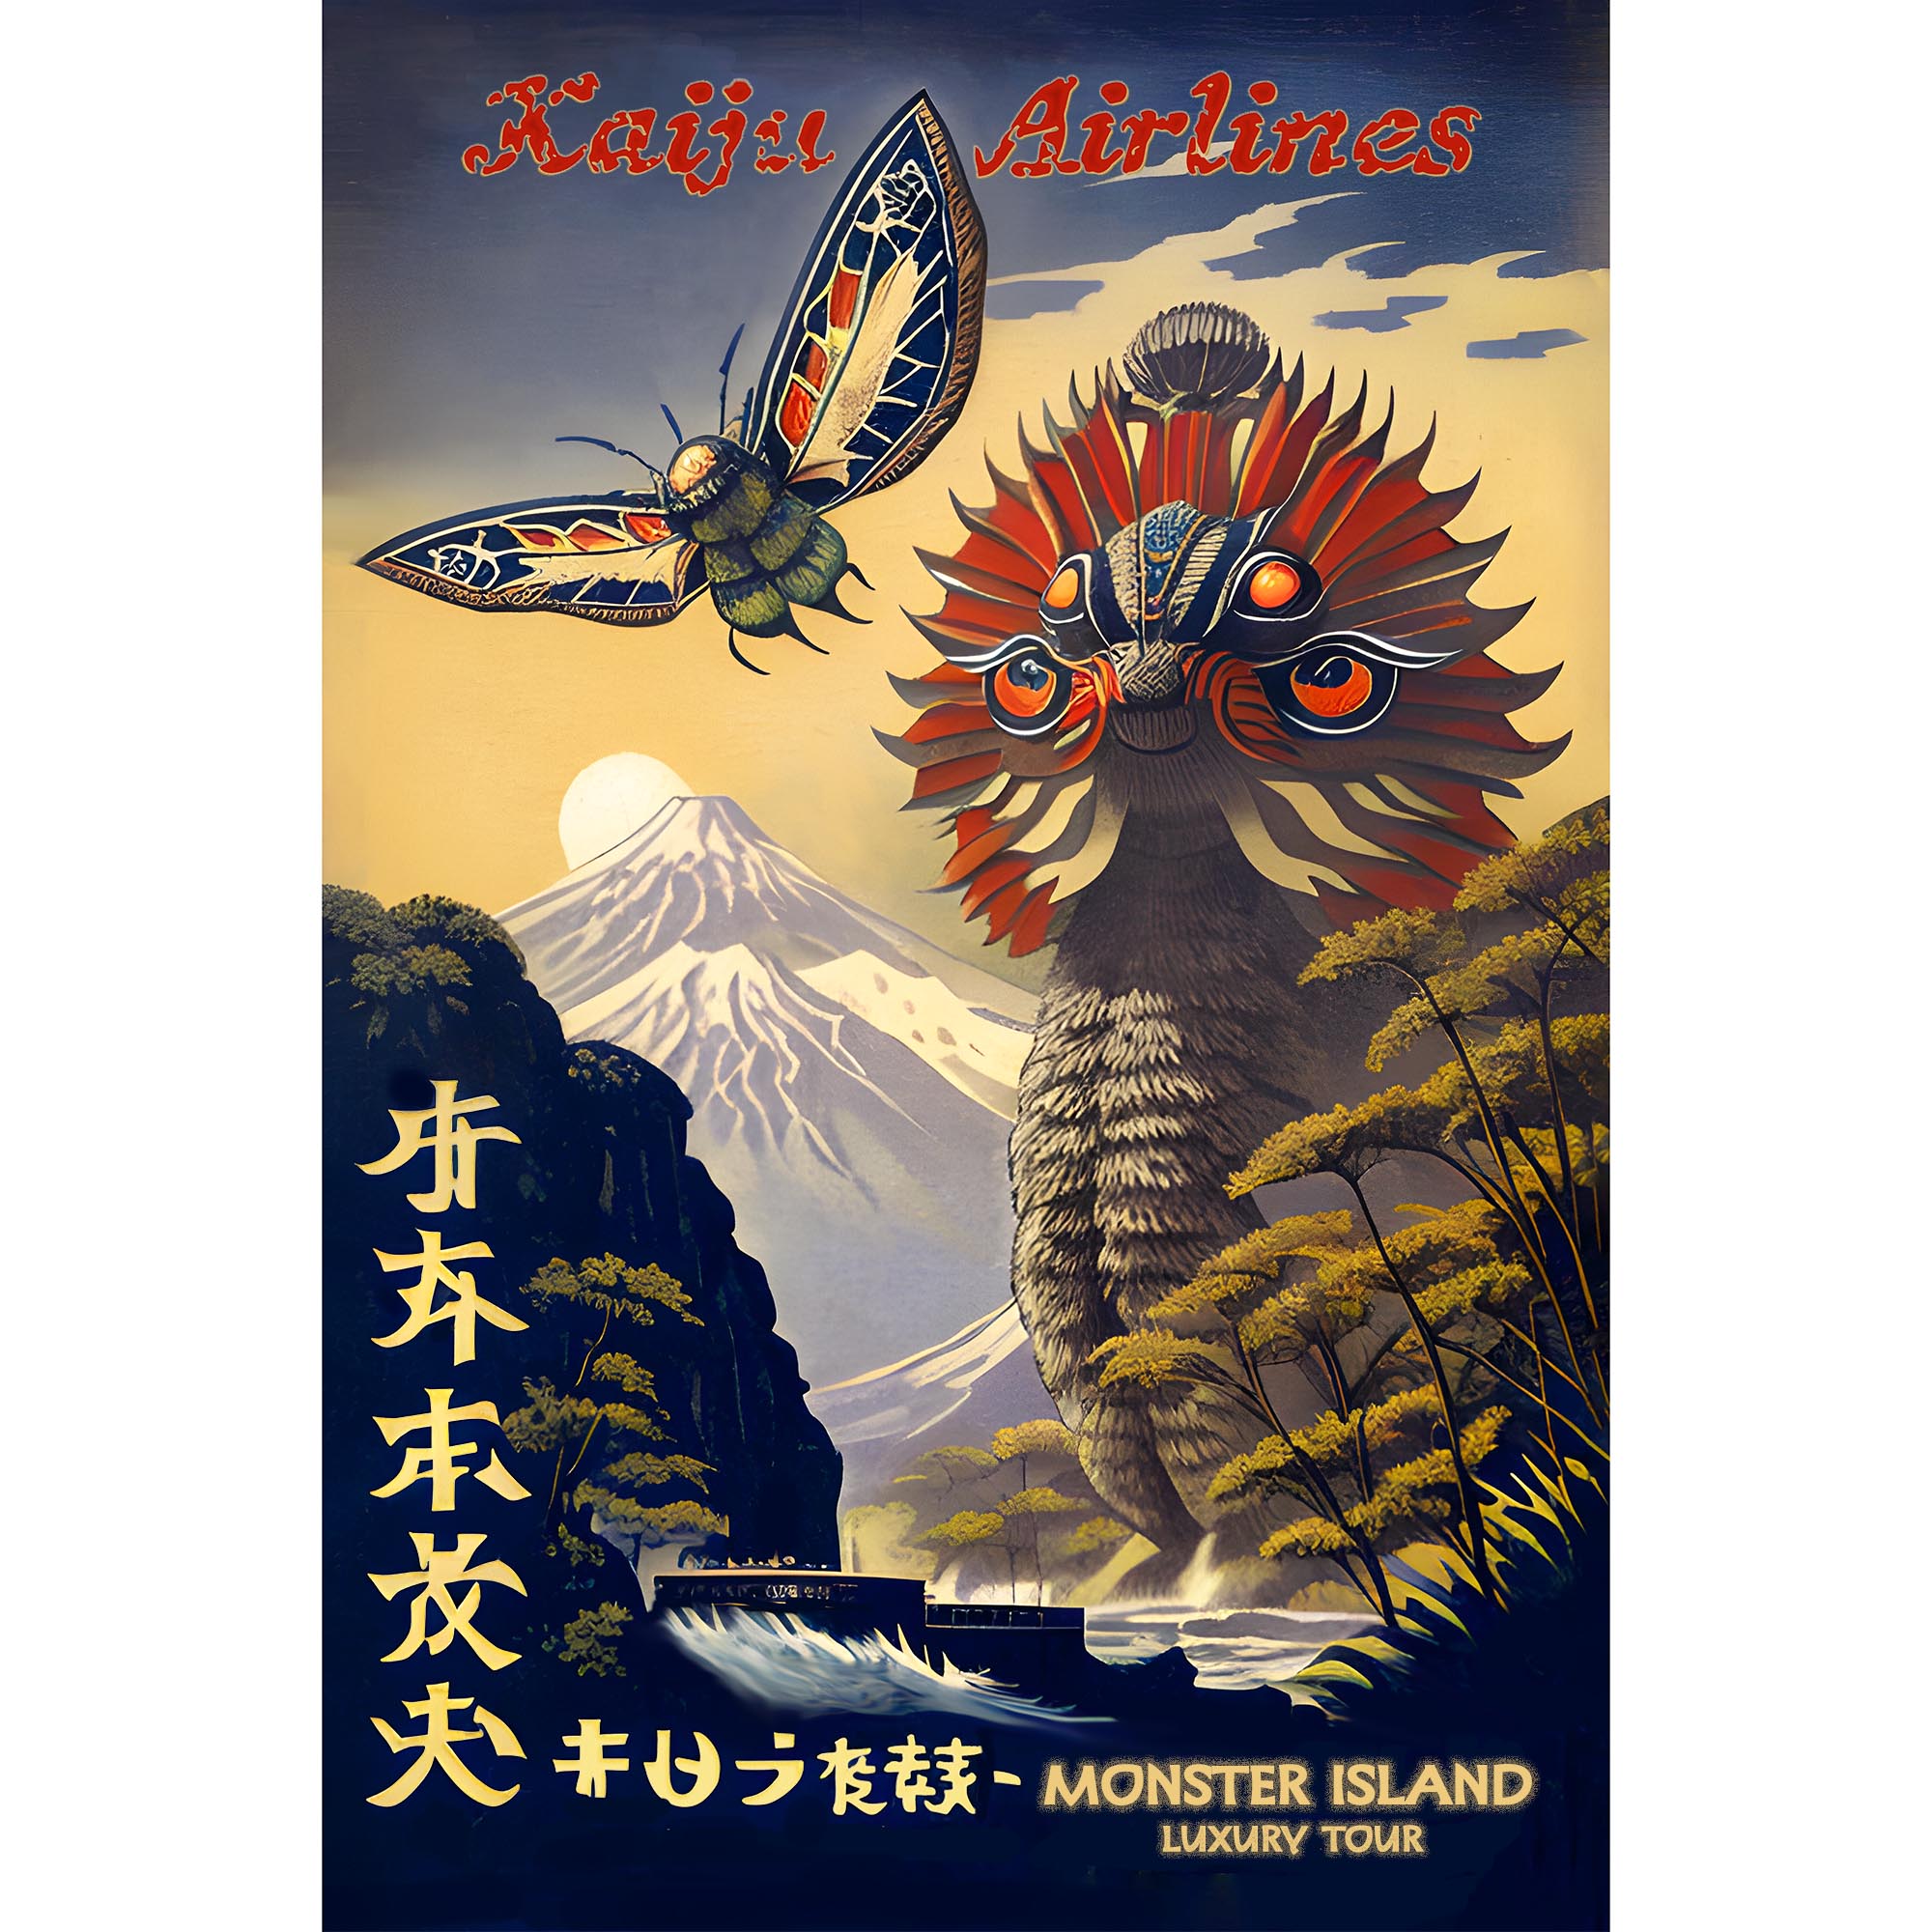 Fine art 8"x12" / Silver Frame Kaiju Airlines, Monster Island Luxury Tour | Surreal Vintage Travel Poster |  Godzilla, Ghidorah, Mothra, Rodan, Gamera Antique Framed Art Print